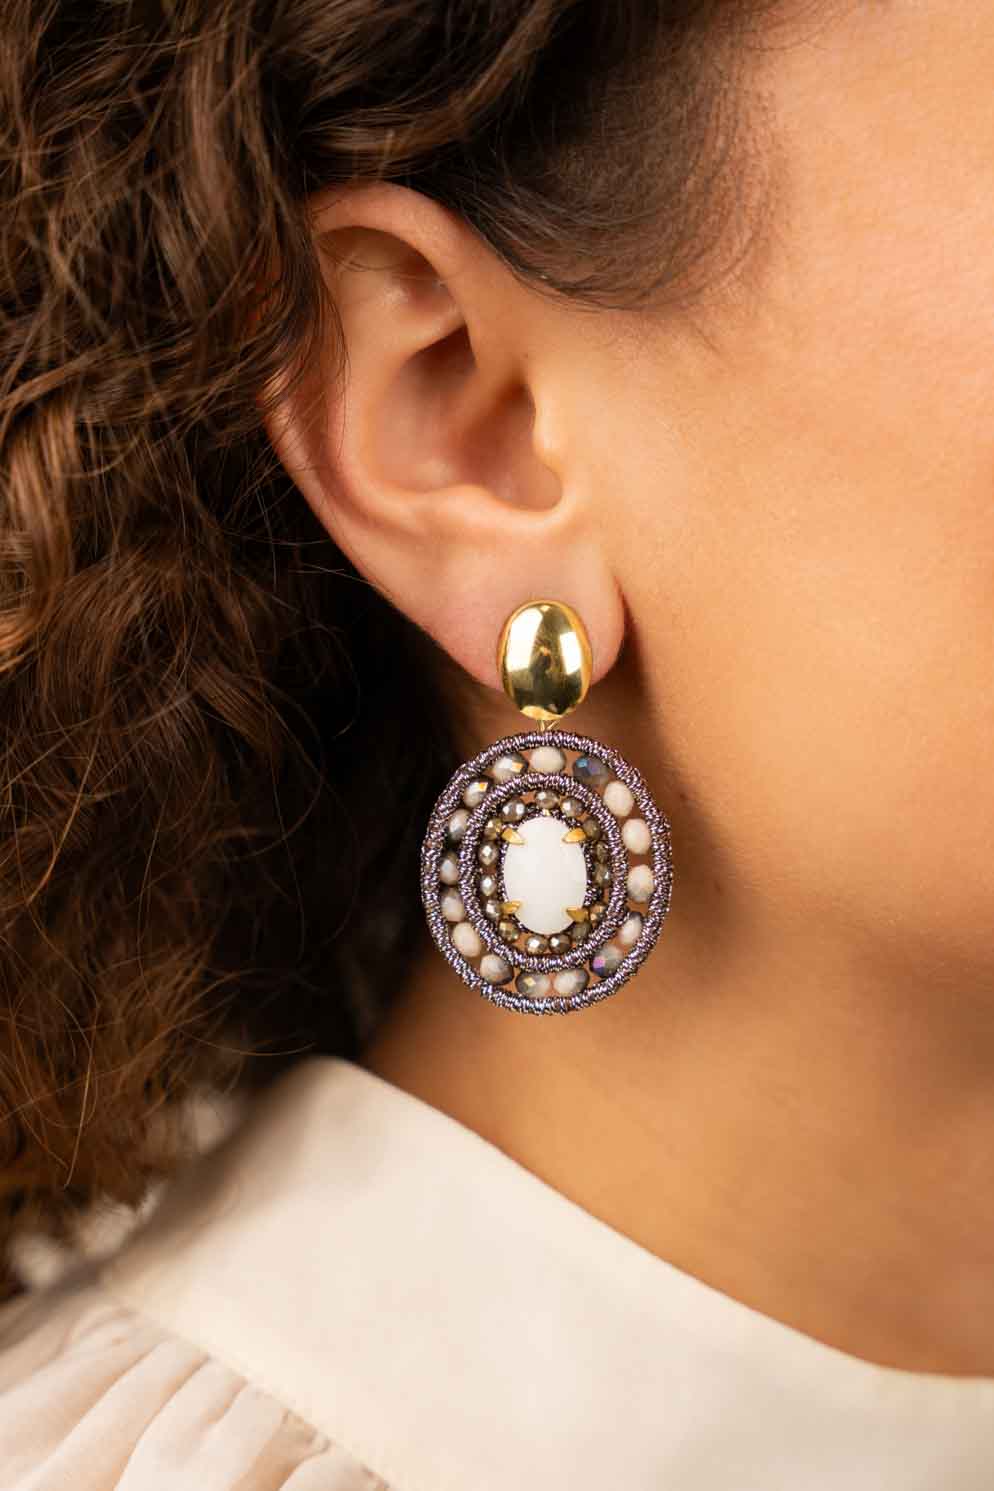 Grey Earrings Belle Oval M With Stonelott-theme.productDescriptionPage.SEO.byTheBrand